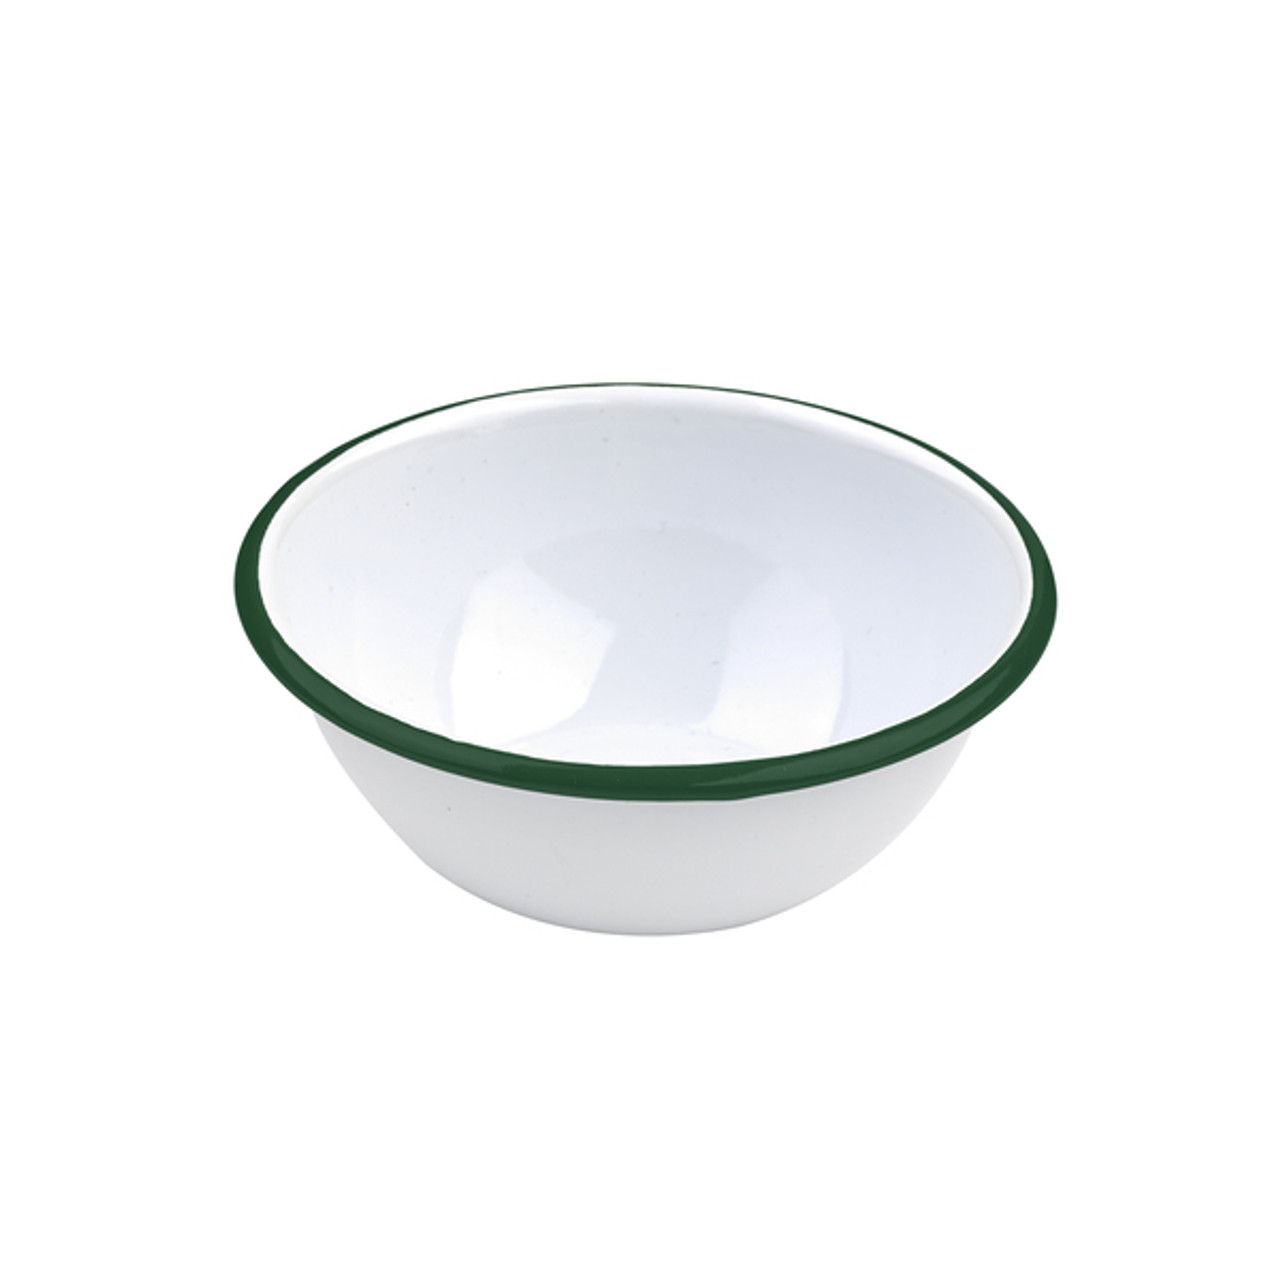 Enamel reusable bowl white wi/green rim 19oz D:6.2in H:2.6in - 12 pcs